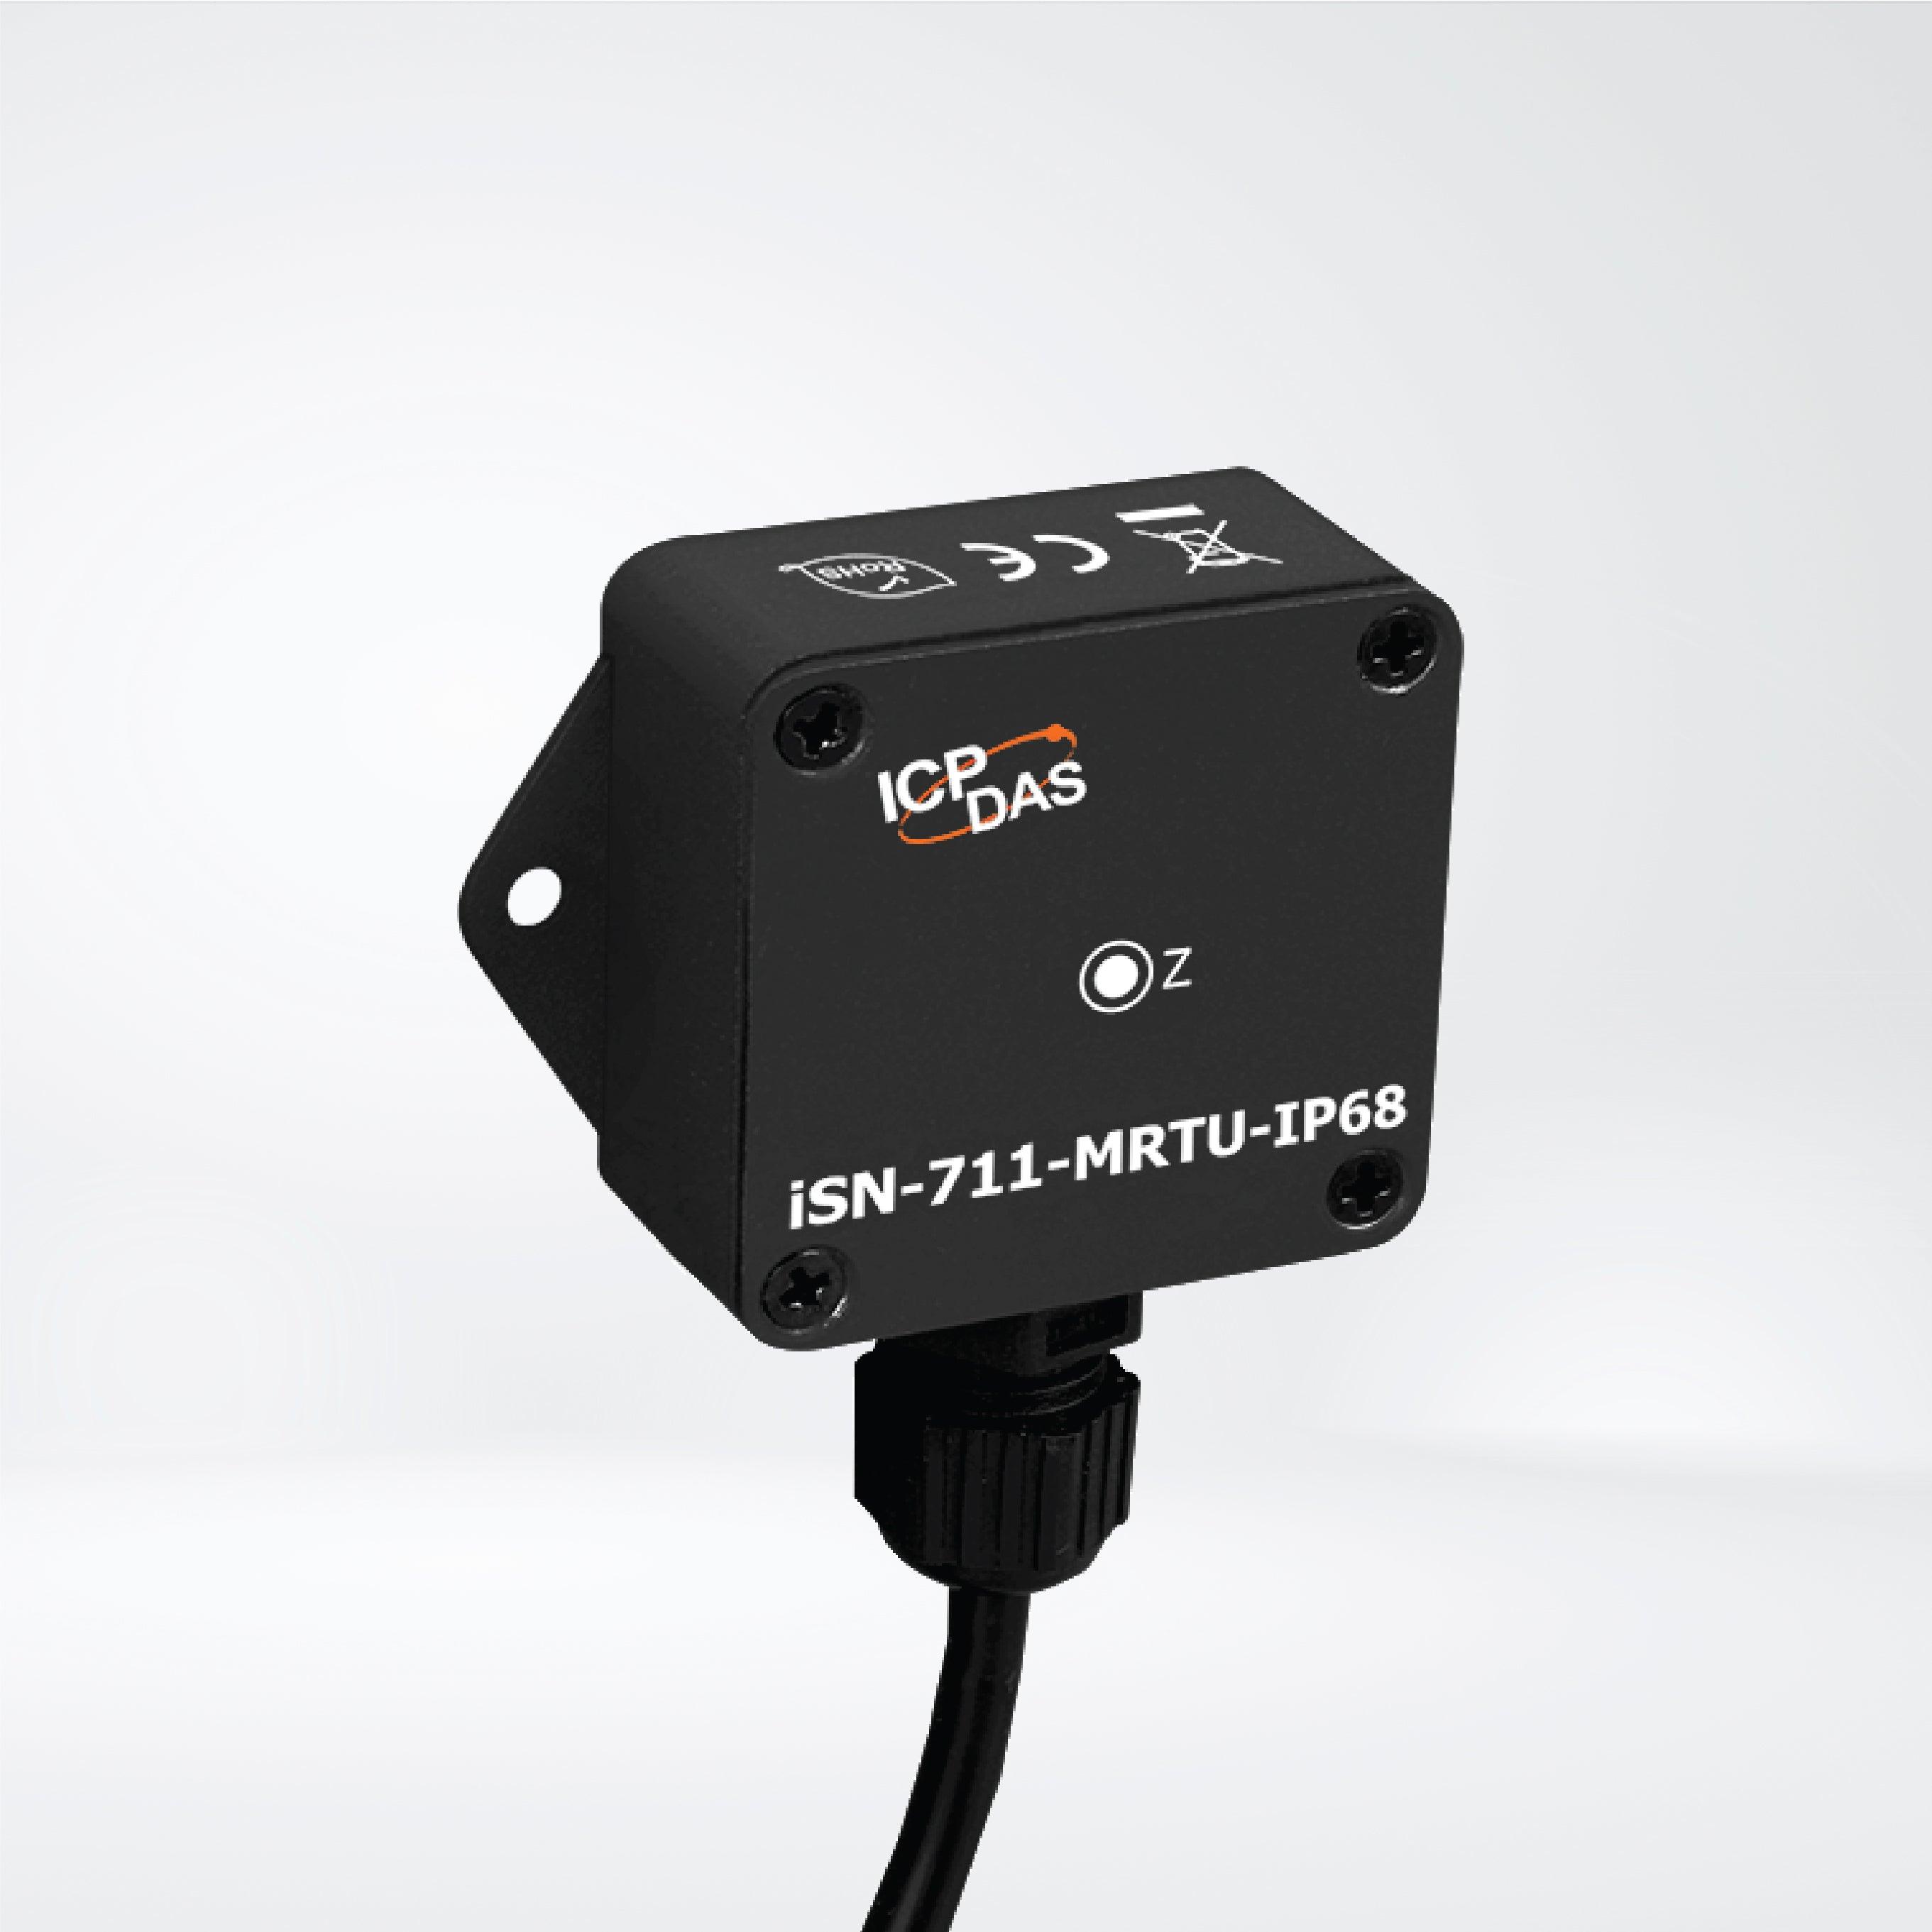 iSN-711-MRTU-IP68 IP68 Single-axis vibration sensor module (RS-485) - Riverplus